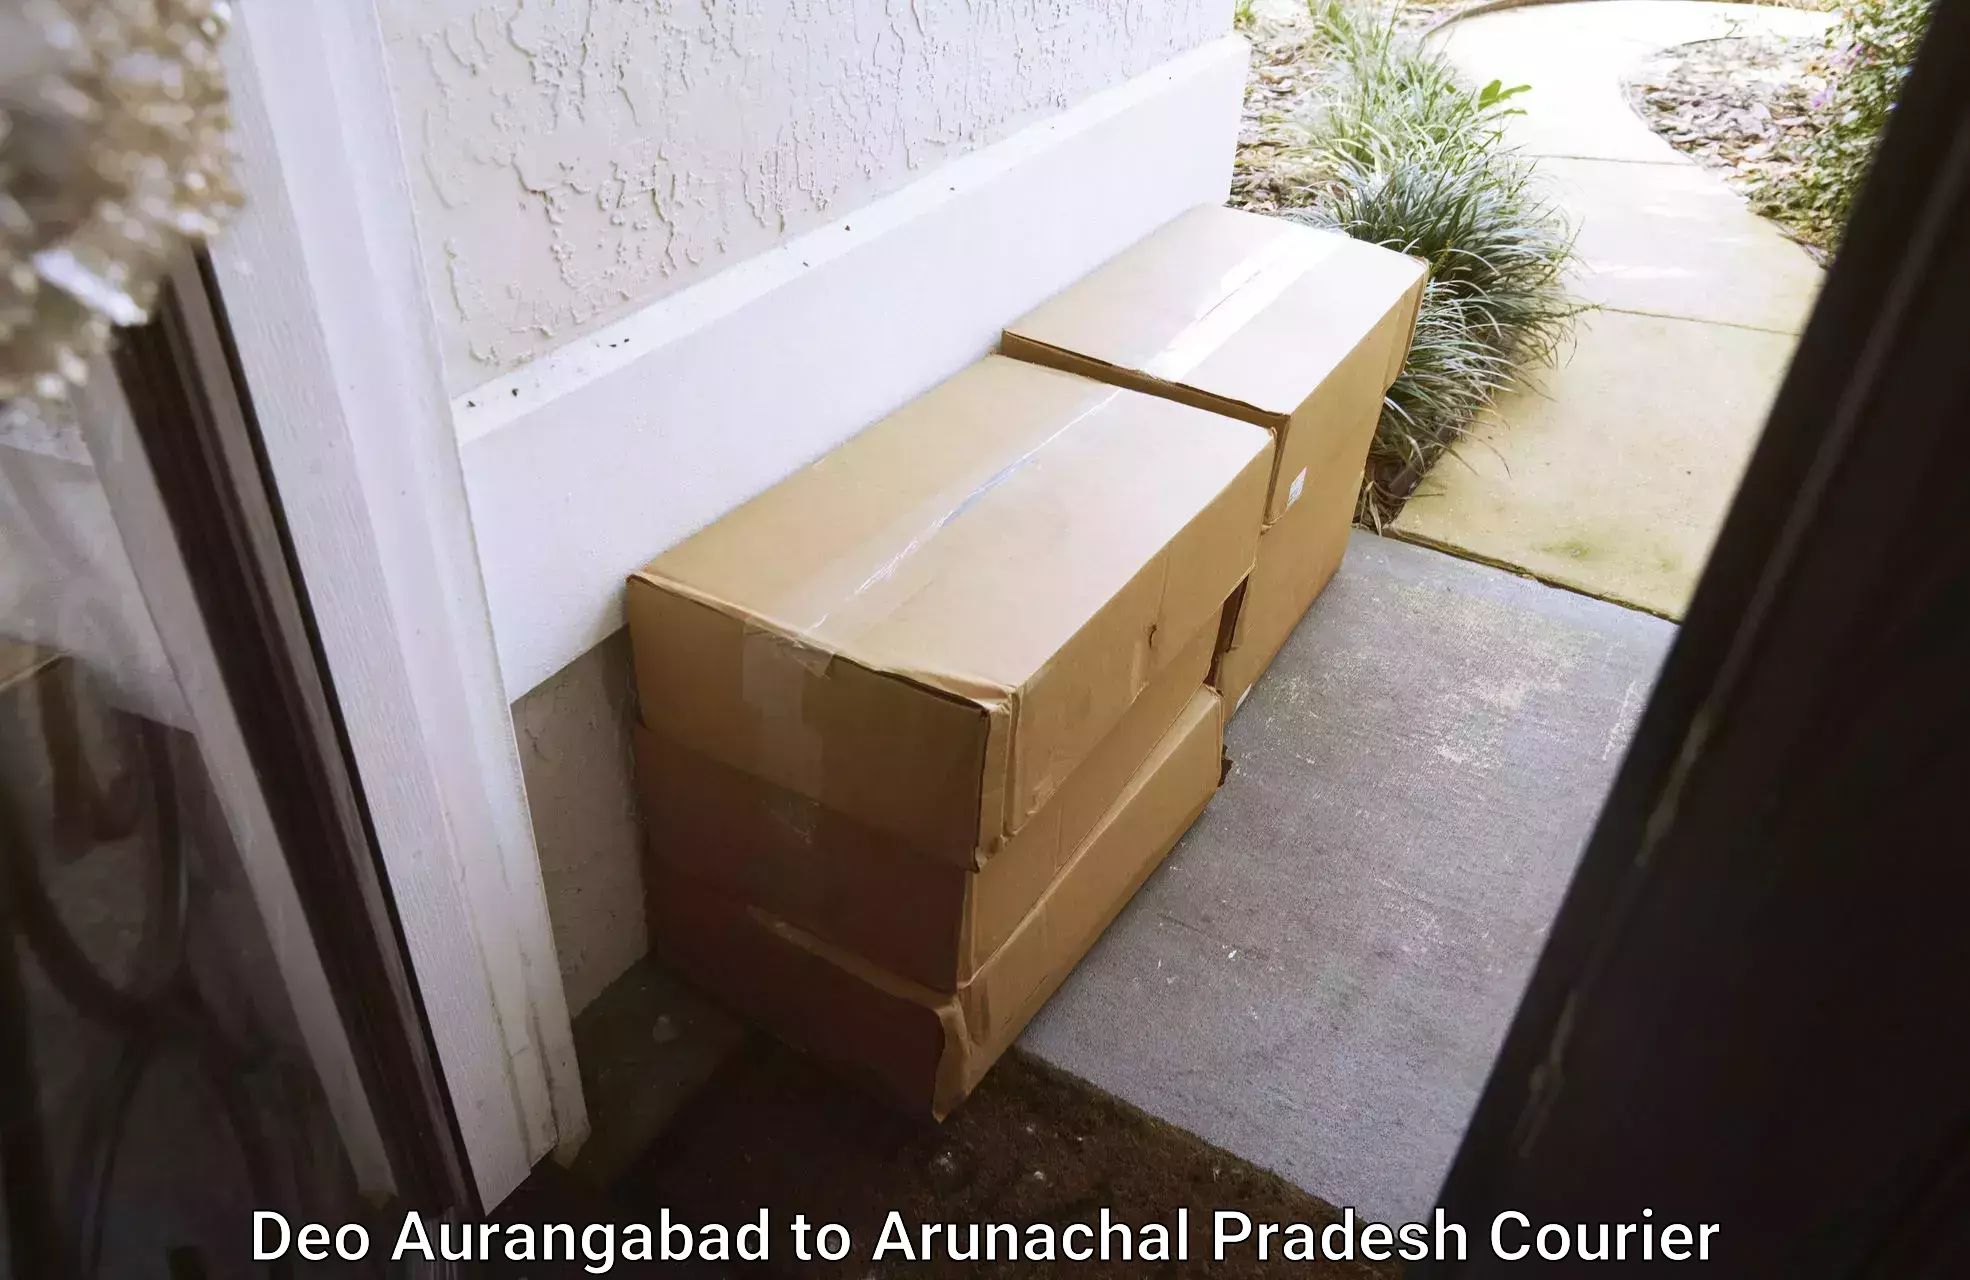 Furniture delivery service Deo Aurangabad to Upper Subansiri